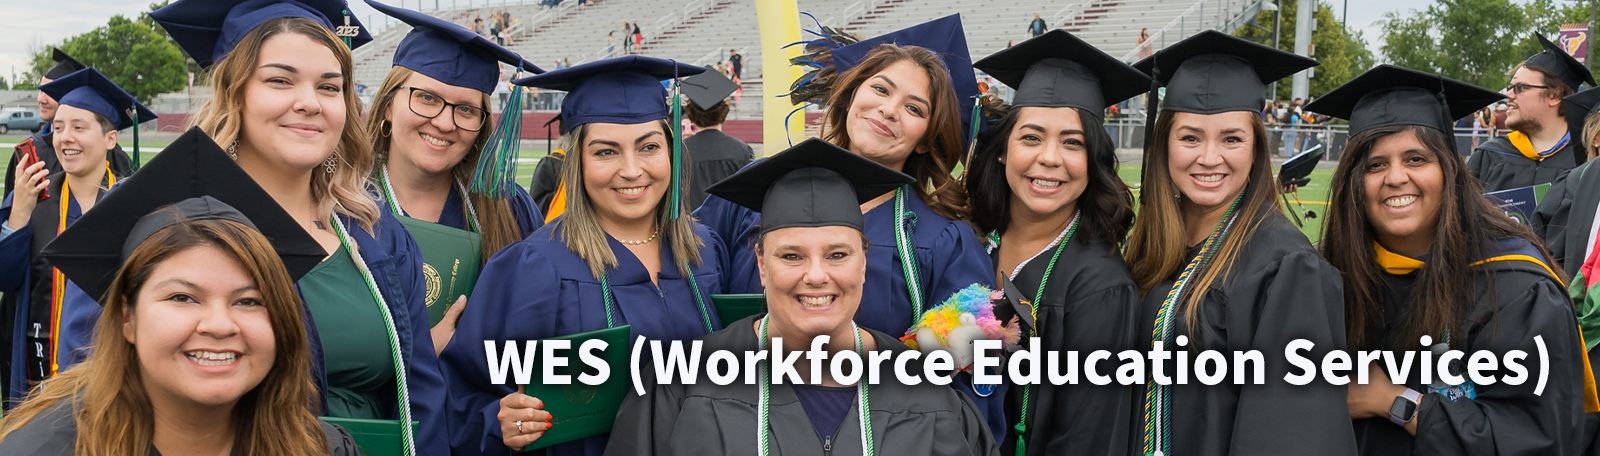 Website header for Workforce Education Services Department